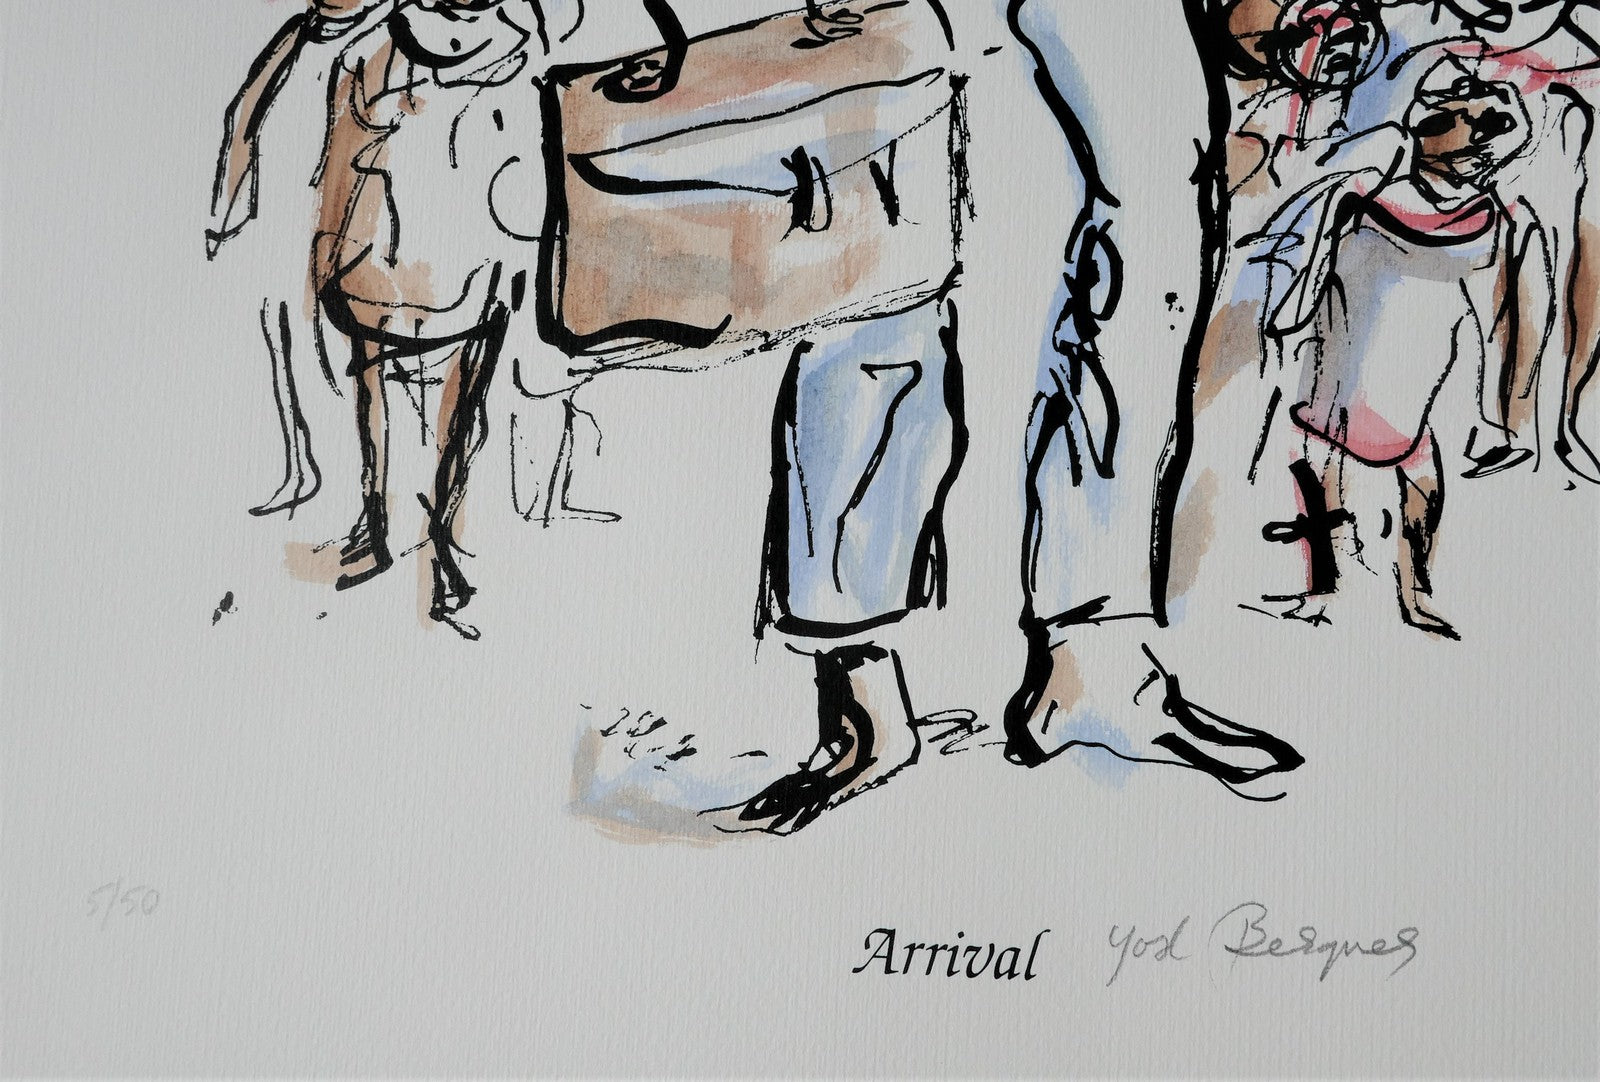 Yosl Bergner 'Arrival, from The Kimberley Album'